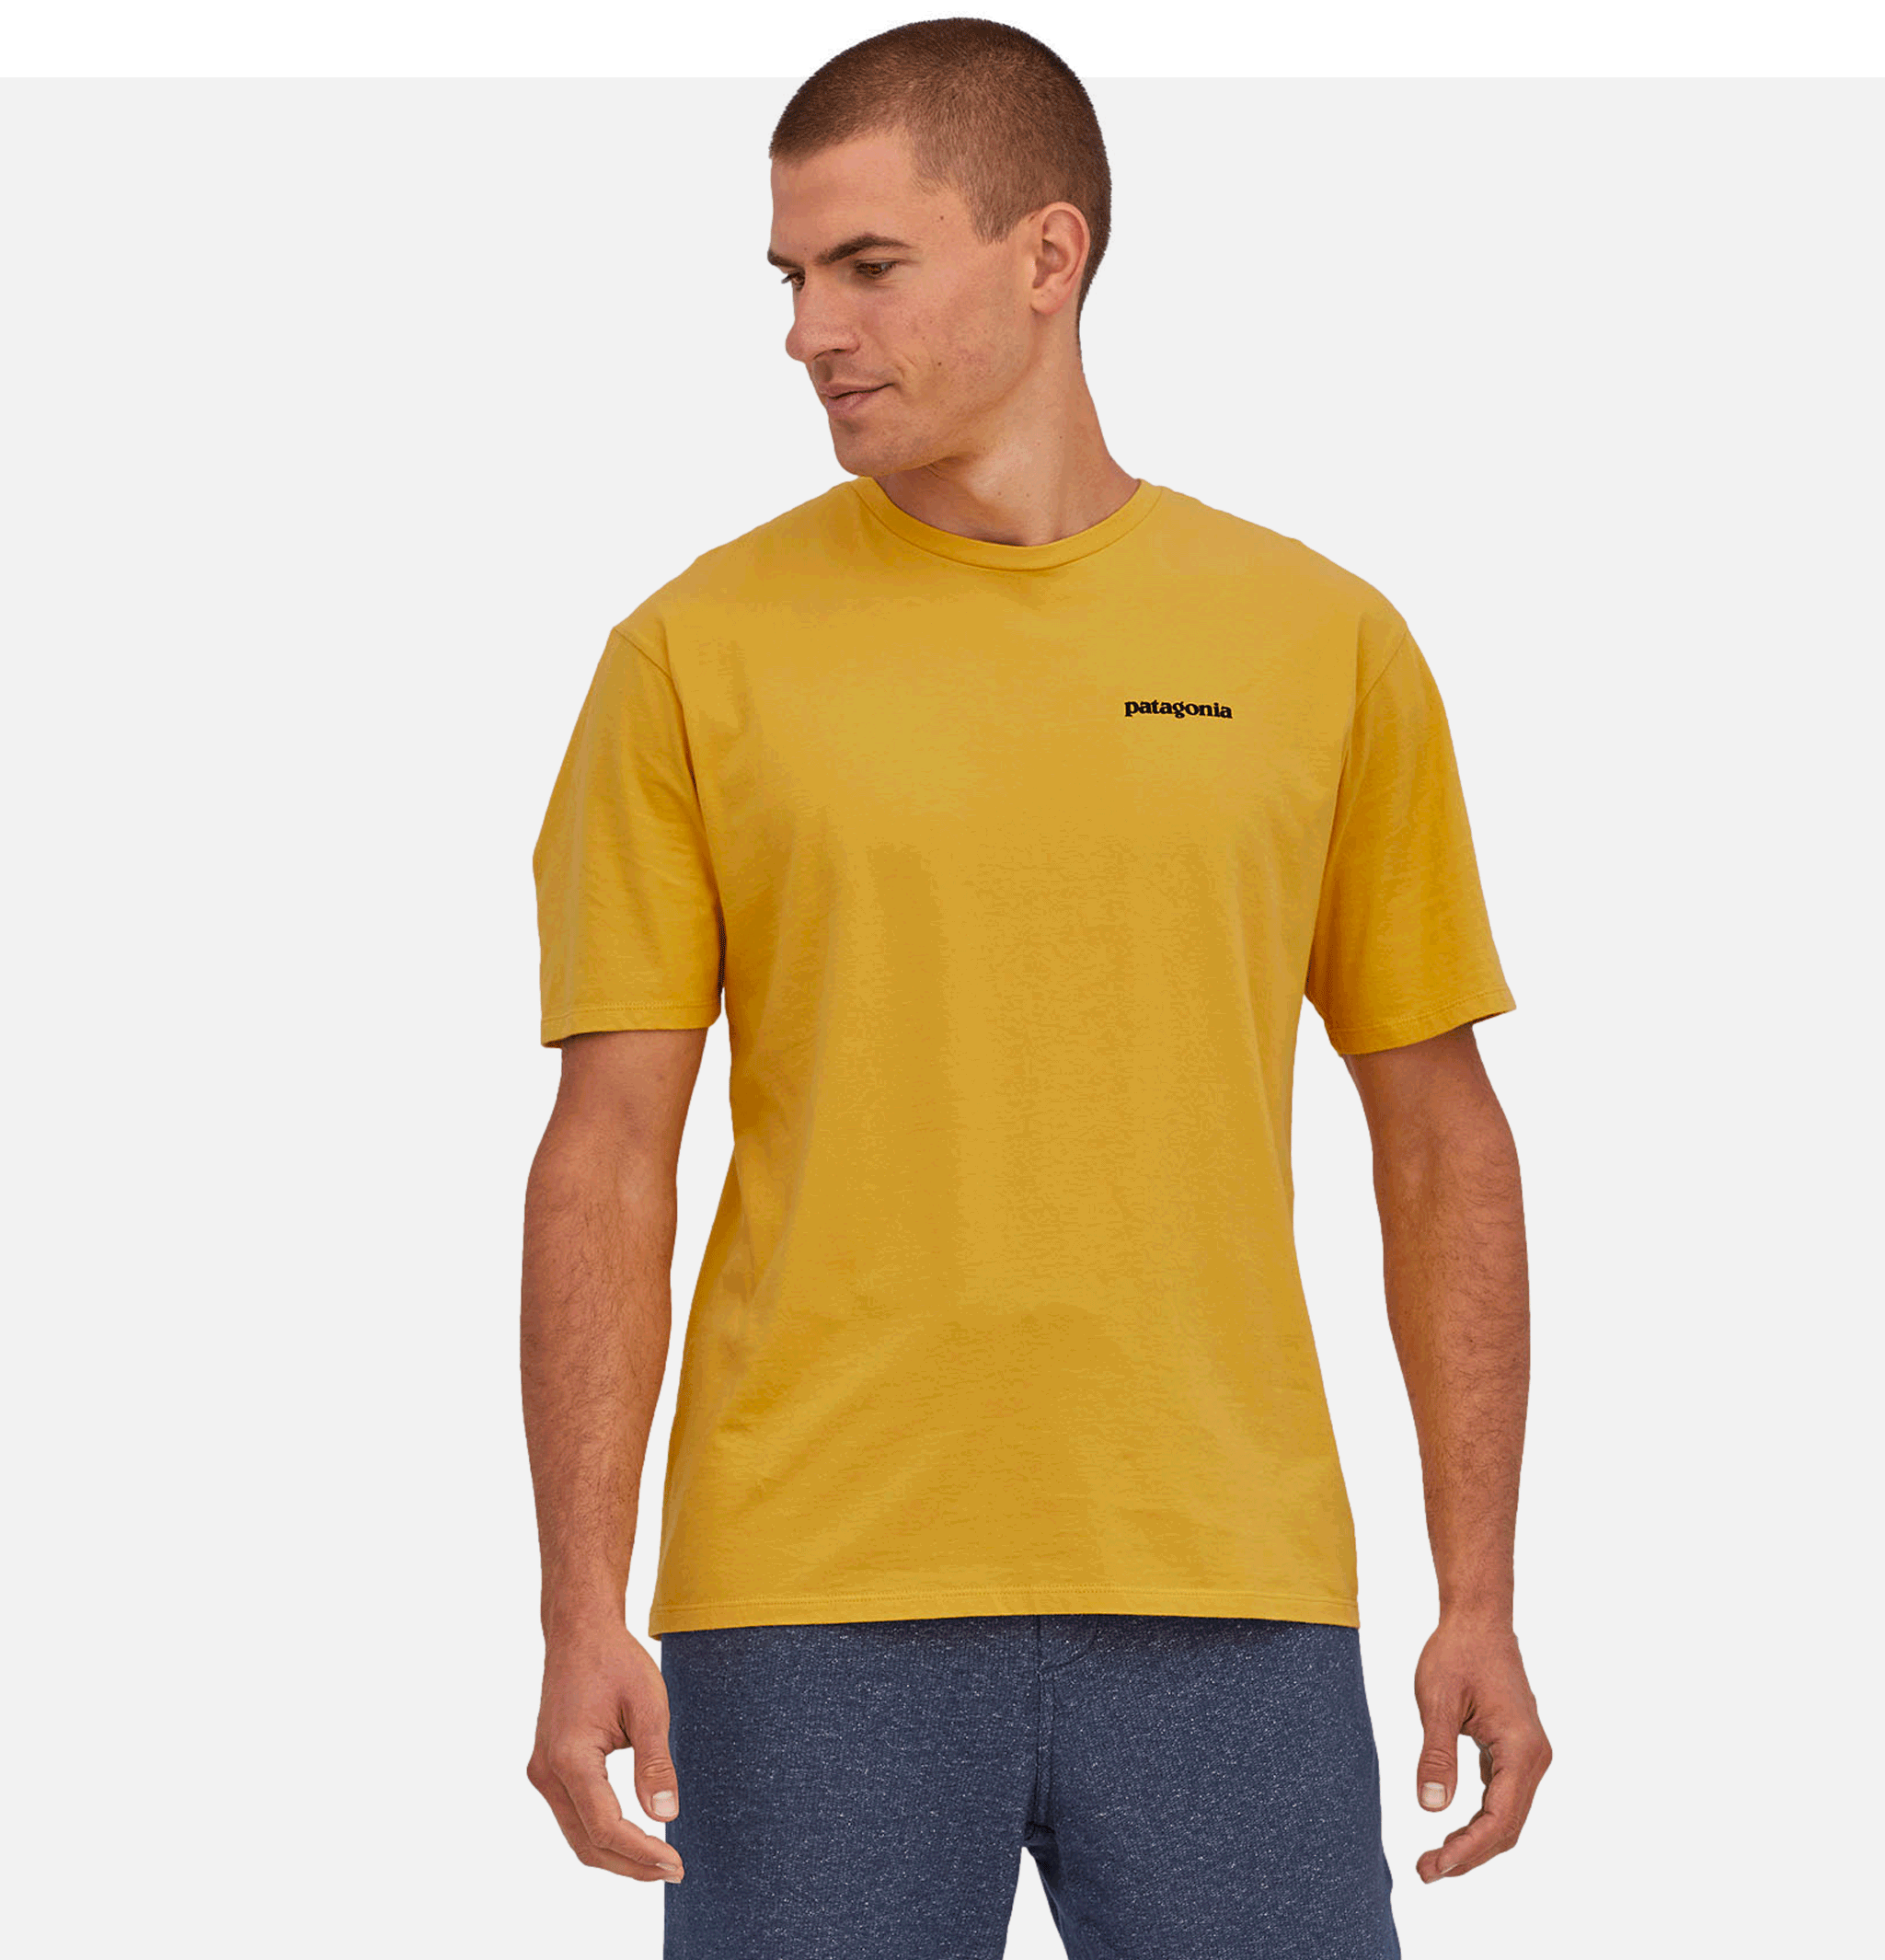 P6 Mission T-shirt Yellow